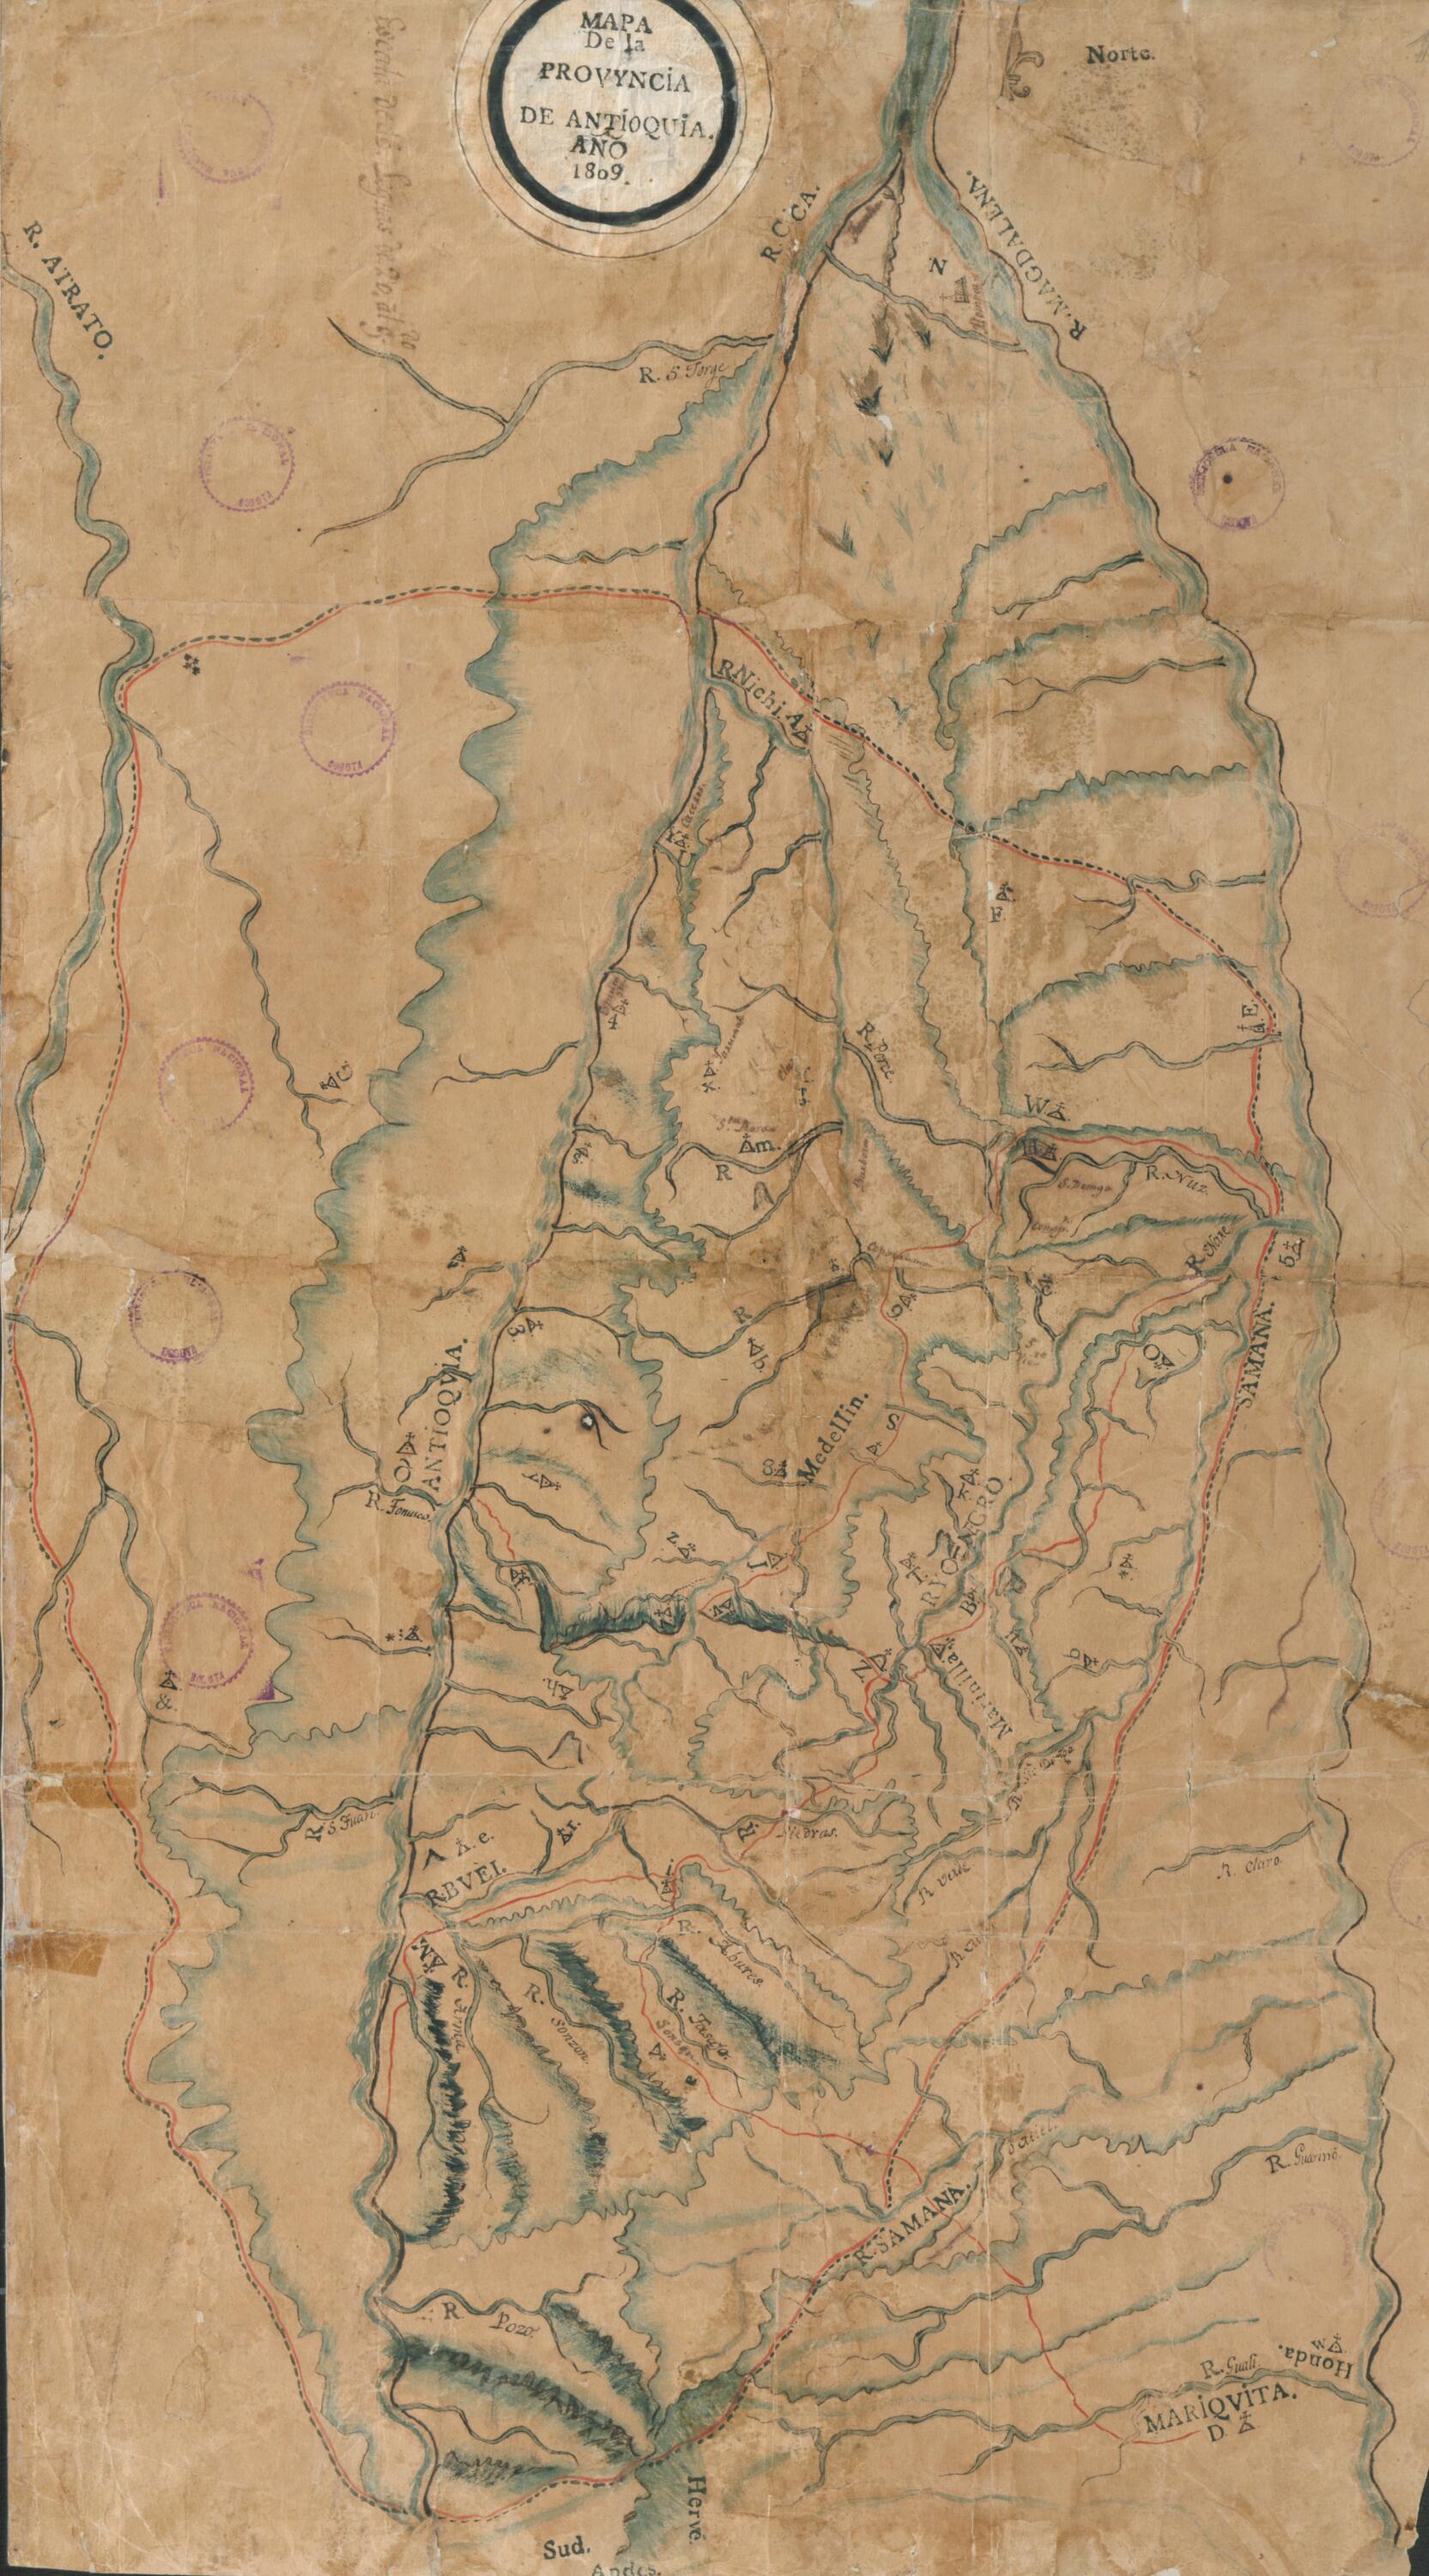 This old map of Map of the Province of Antioquia. (Mapa De La Provincia De Antioquia) from 1809 was created by Francisco José De Caldas, José Manuel Restrepo in 1809